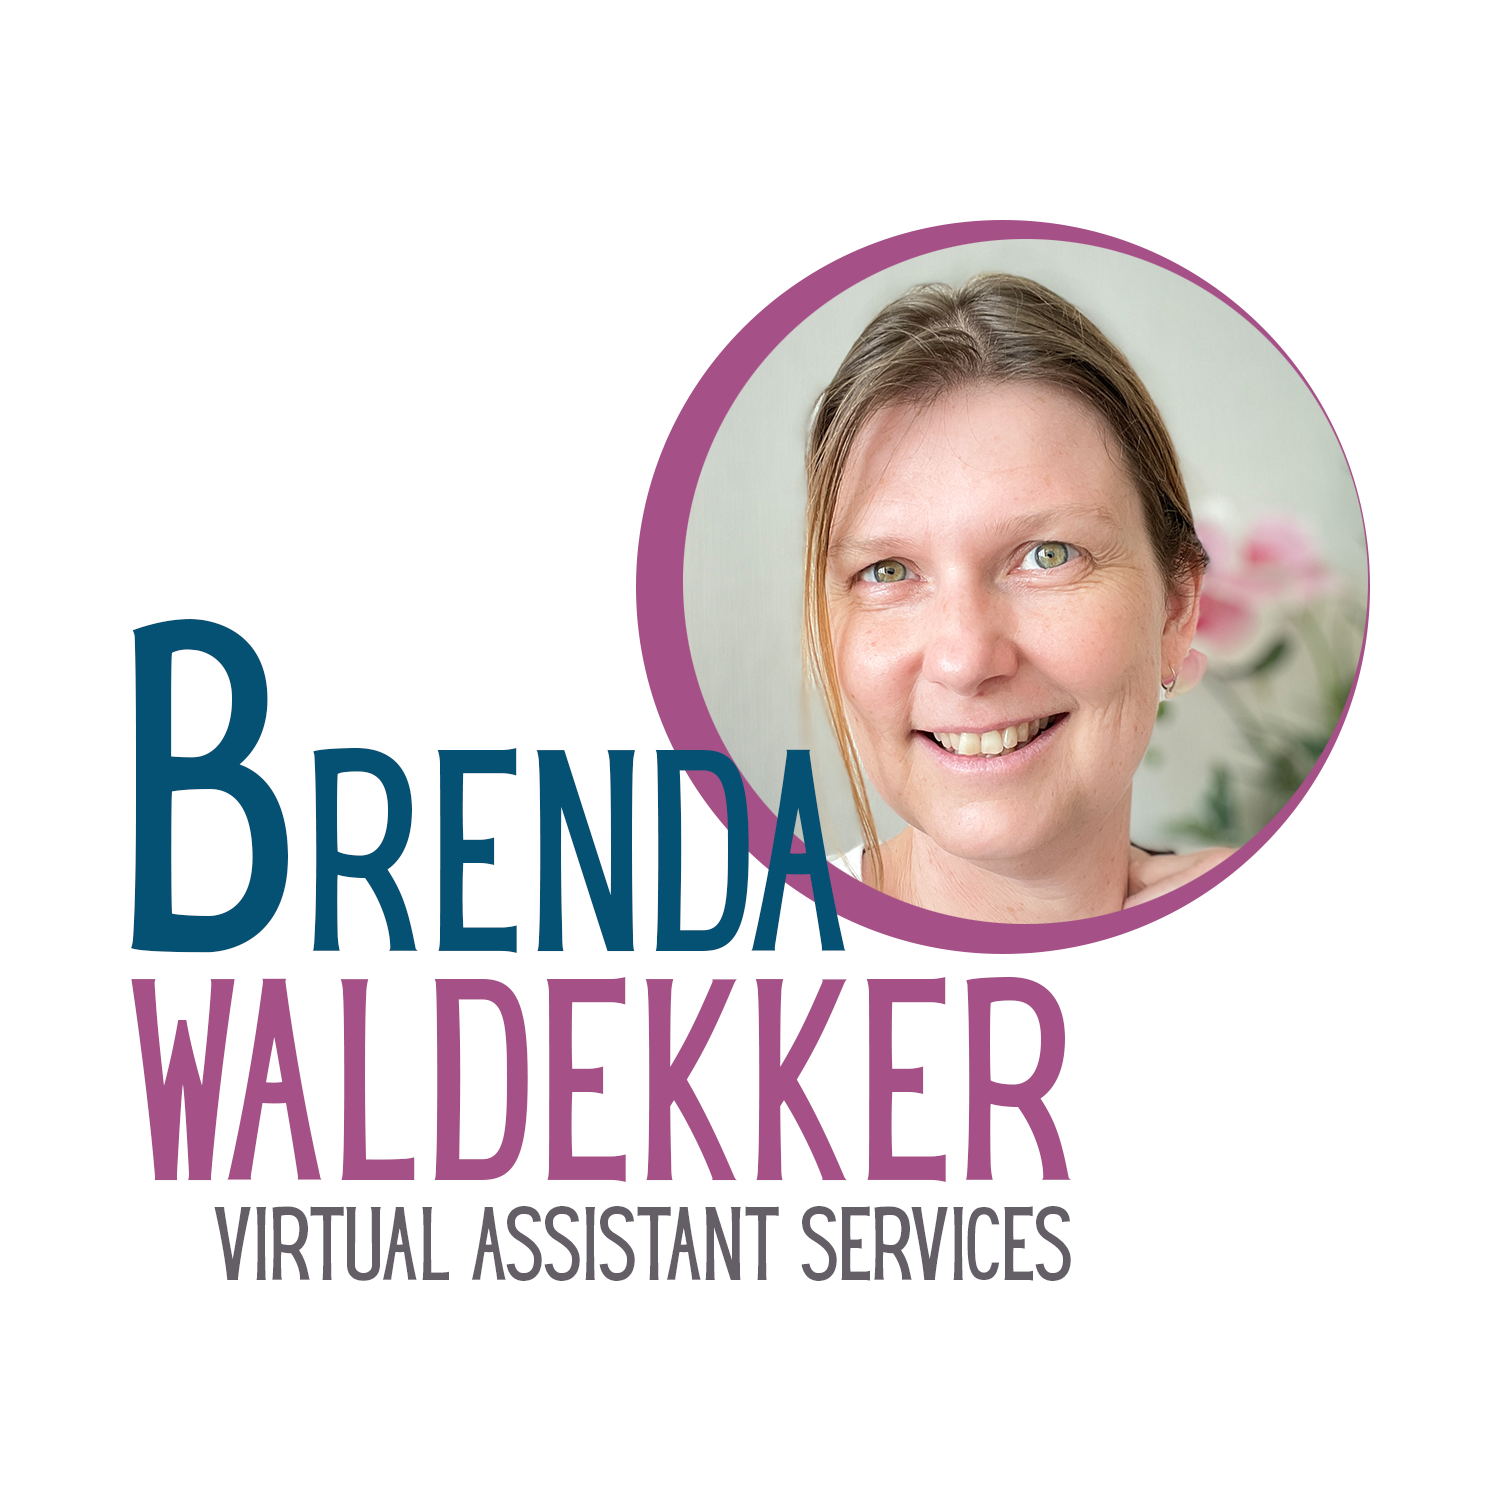 Brenda Waldekker Virtual Assistant Services